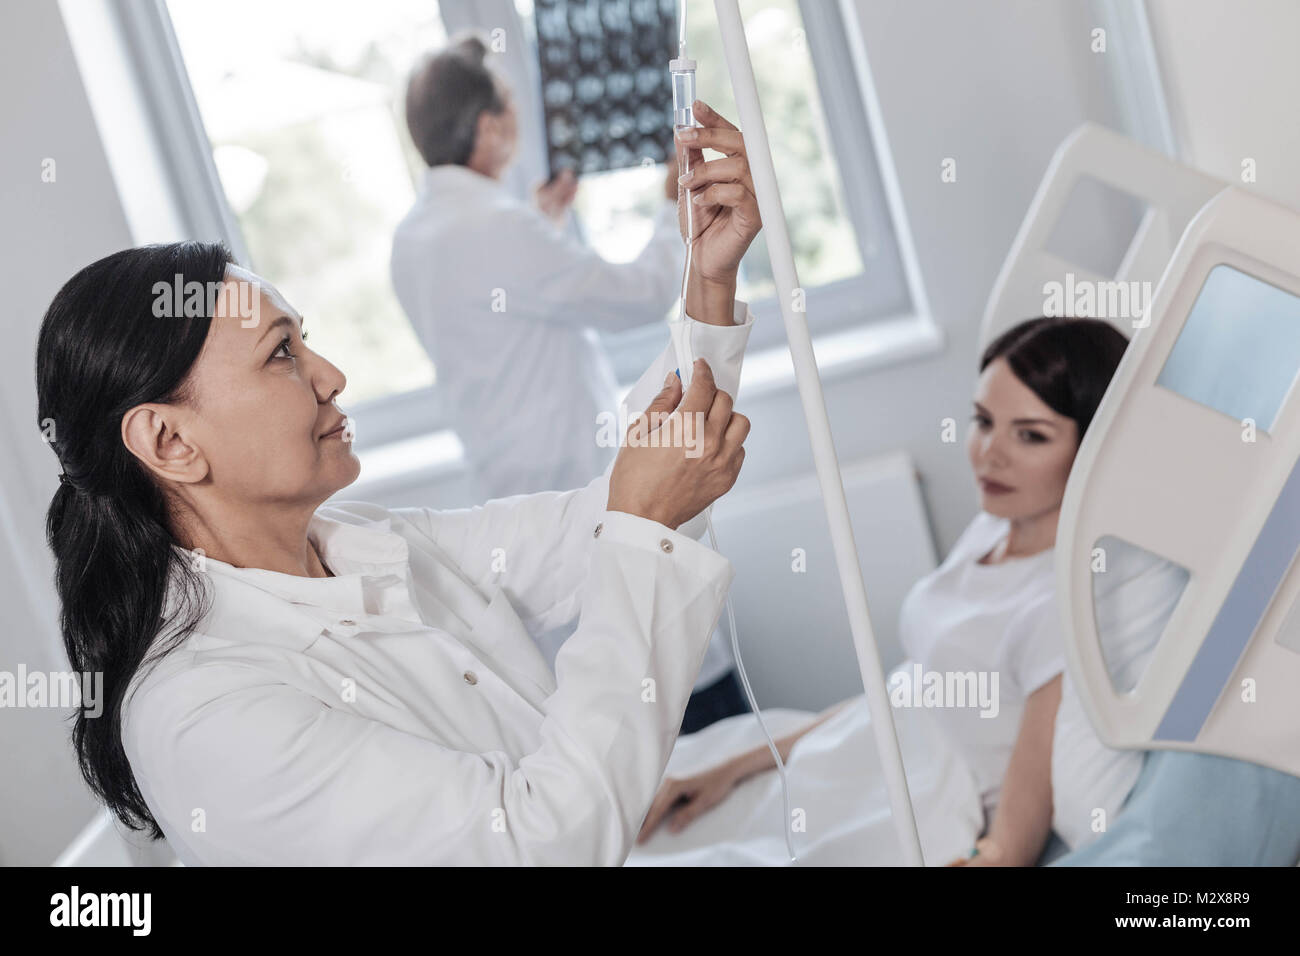 Joyful female medical worker adjusting drop counter Stock Photo